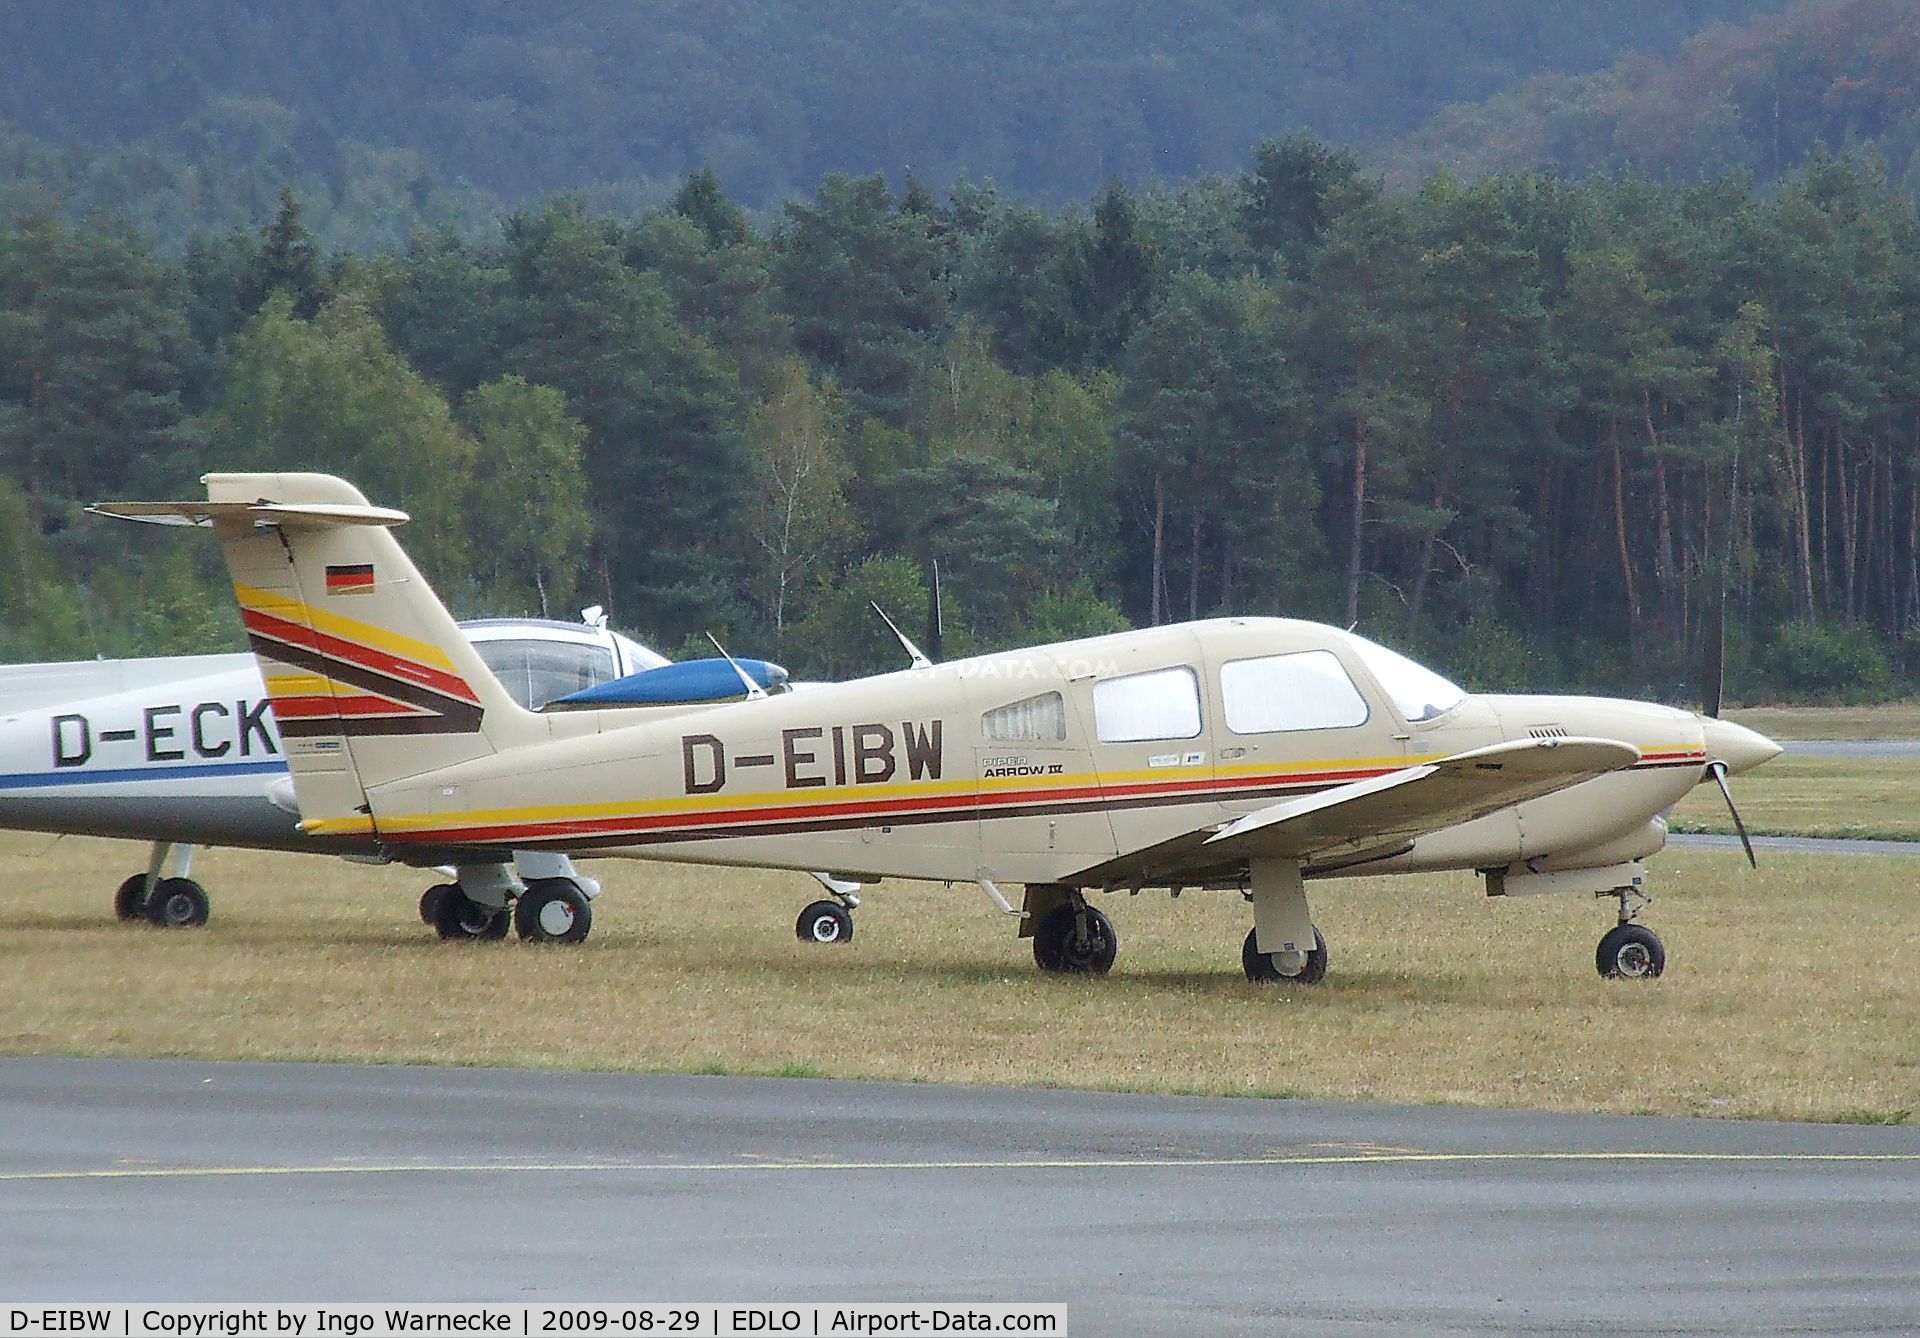 D-EIBW, 1981 Piper PA-28RT-201T Turbo Arrow IV Arrow IV C/N 28R-8131162, Piper PA-28RT-201T Turbo Arrow IV at Oerlinghausen airfield